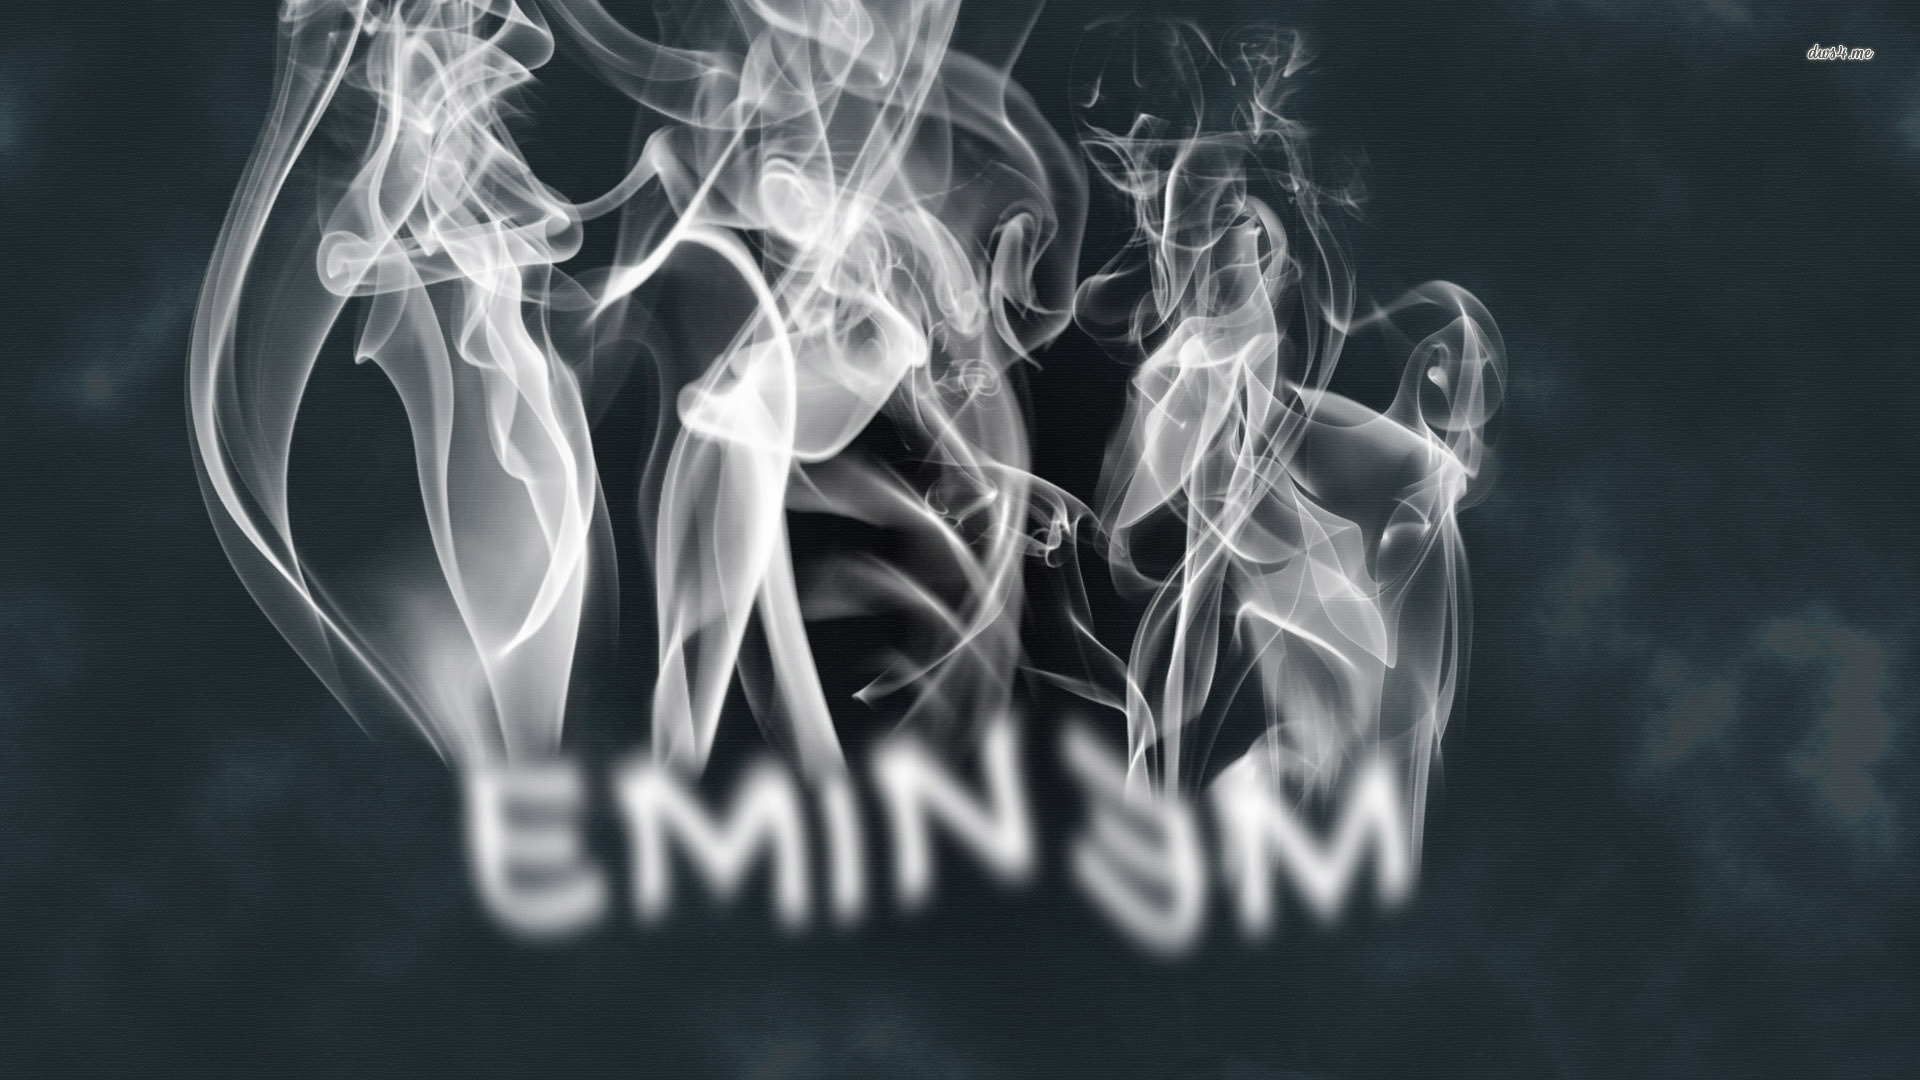 Eminem Wallpapers HD flames